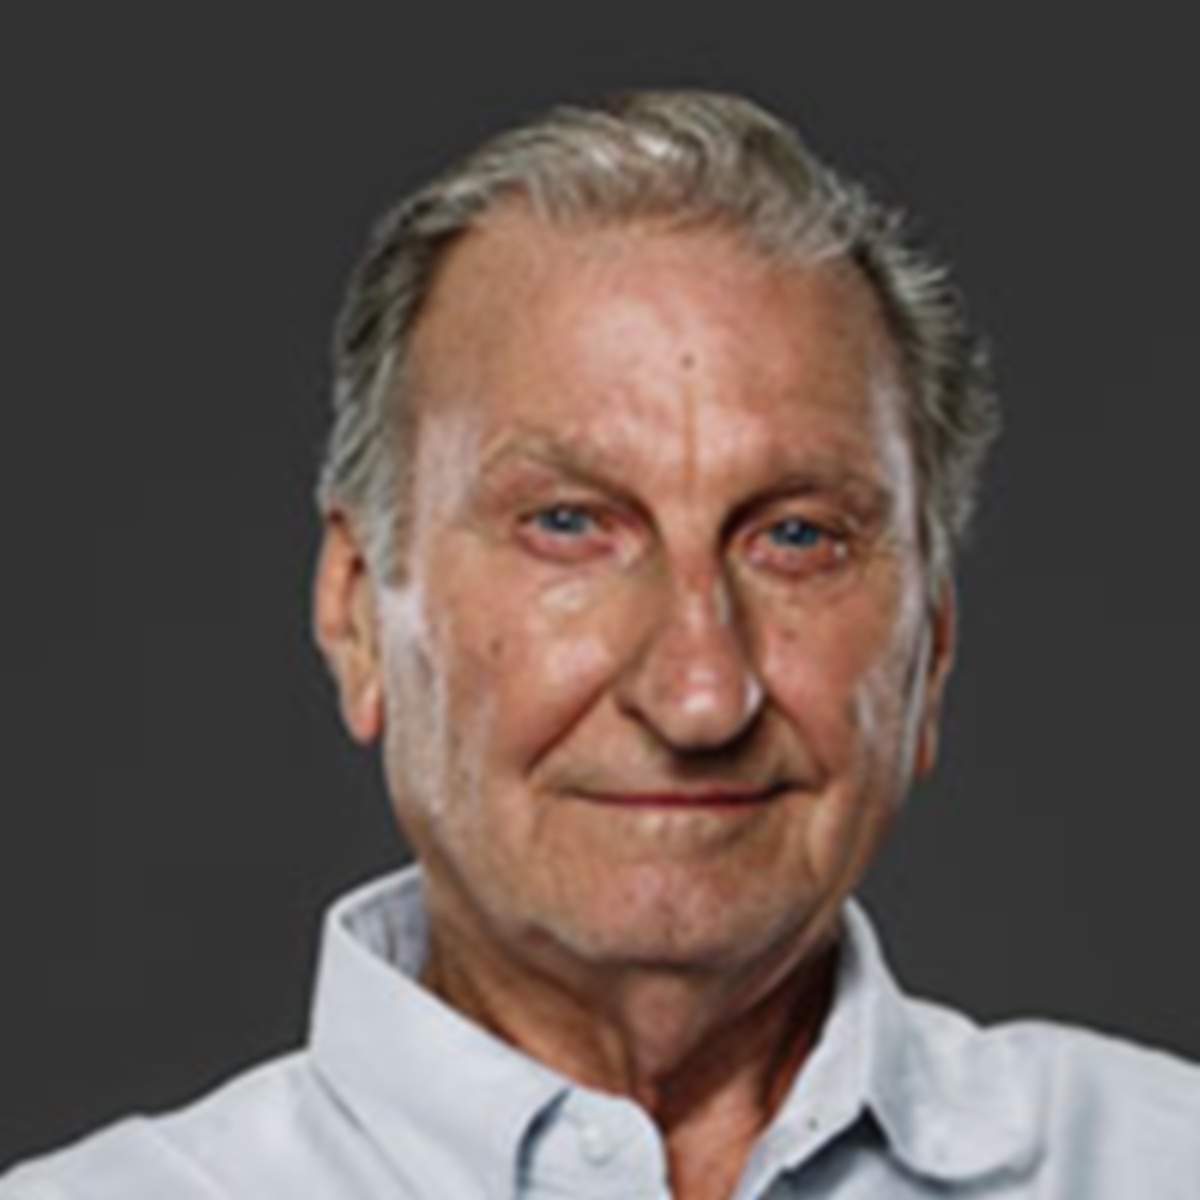 Age UK ambassador and jousting champion <b>Alan Beattie</b>, 80, breaks new ground <b>...</b> - 4131512